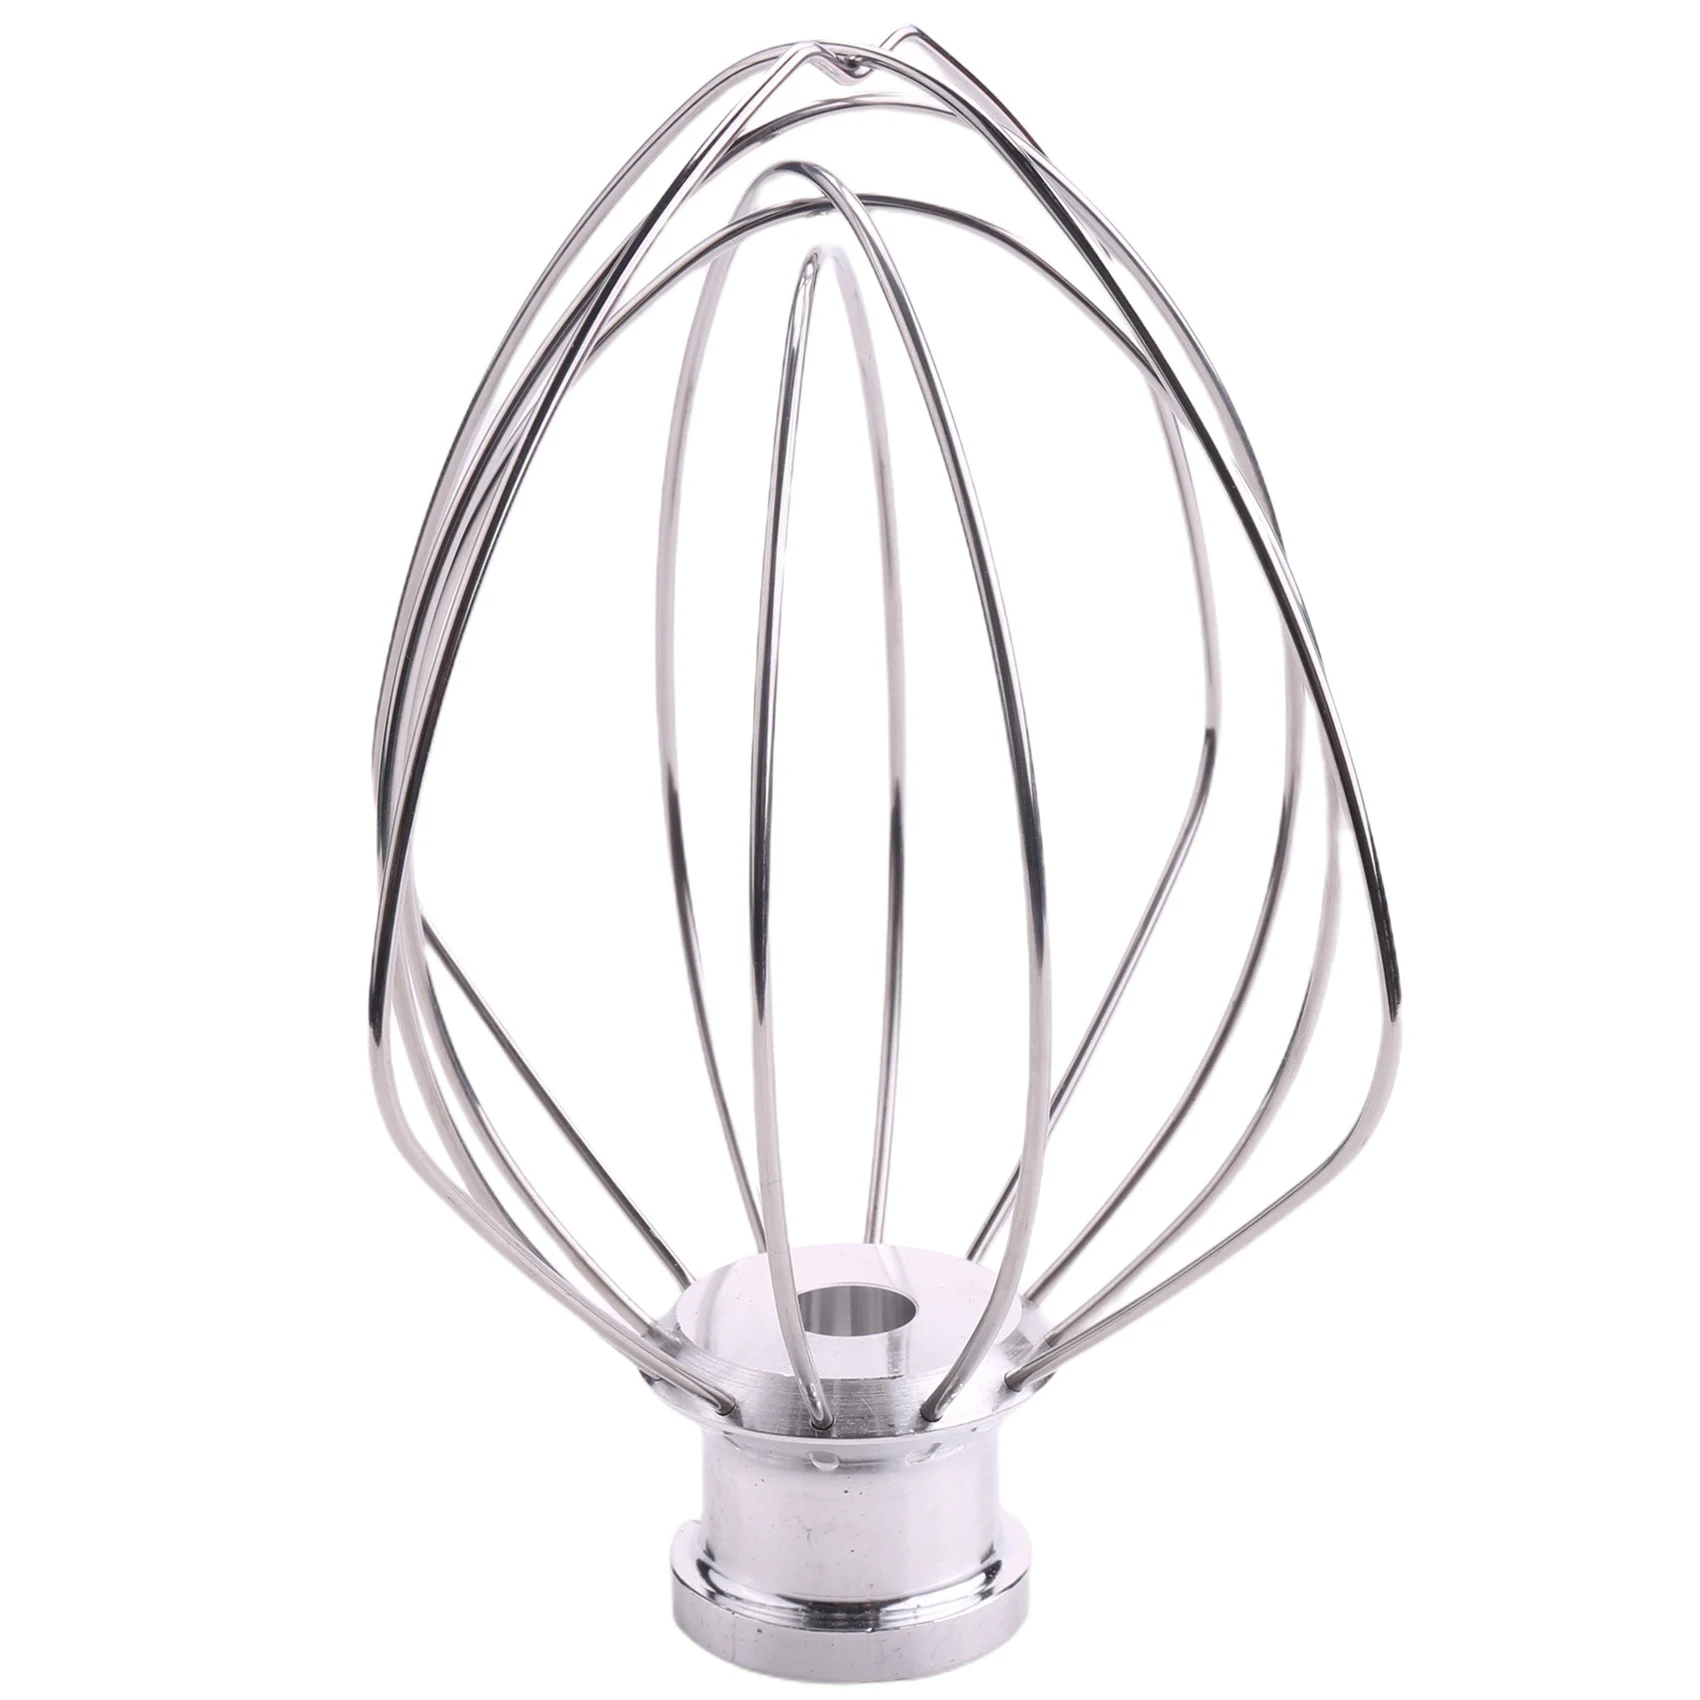 

Stainless Steel Wire Whip Mixer Attachment for Kitchenaid K45Ww 9704329 Flour Cake Balloon Whisk Egg Cream Stirrer